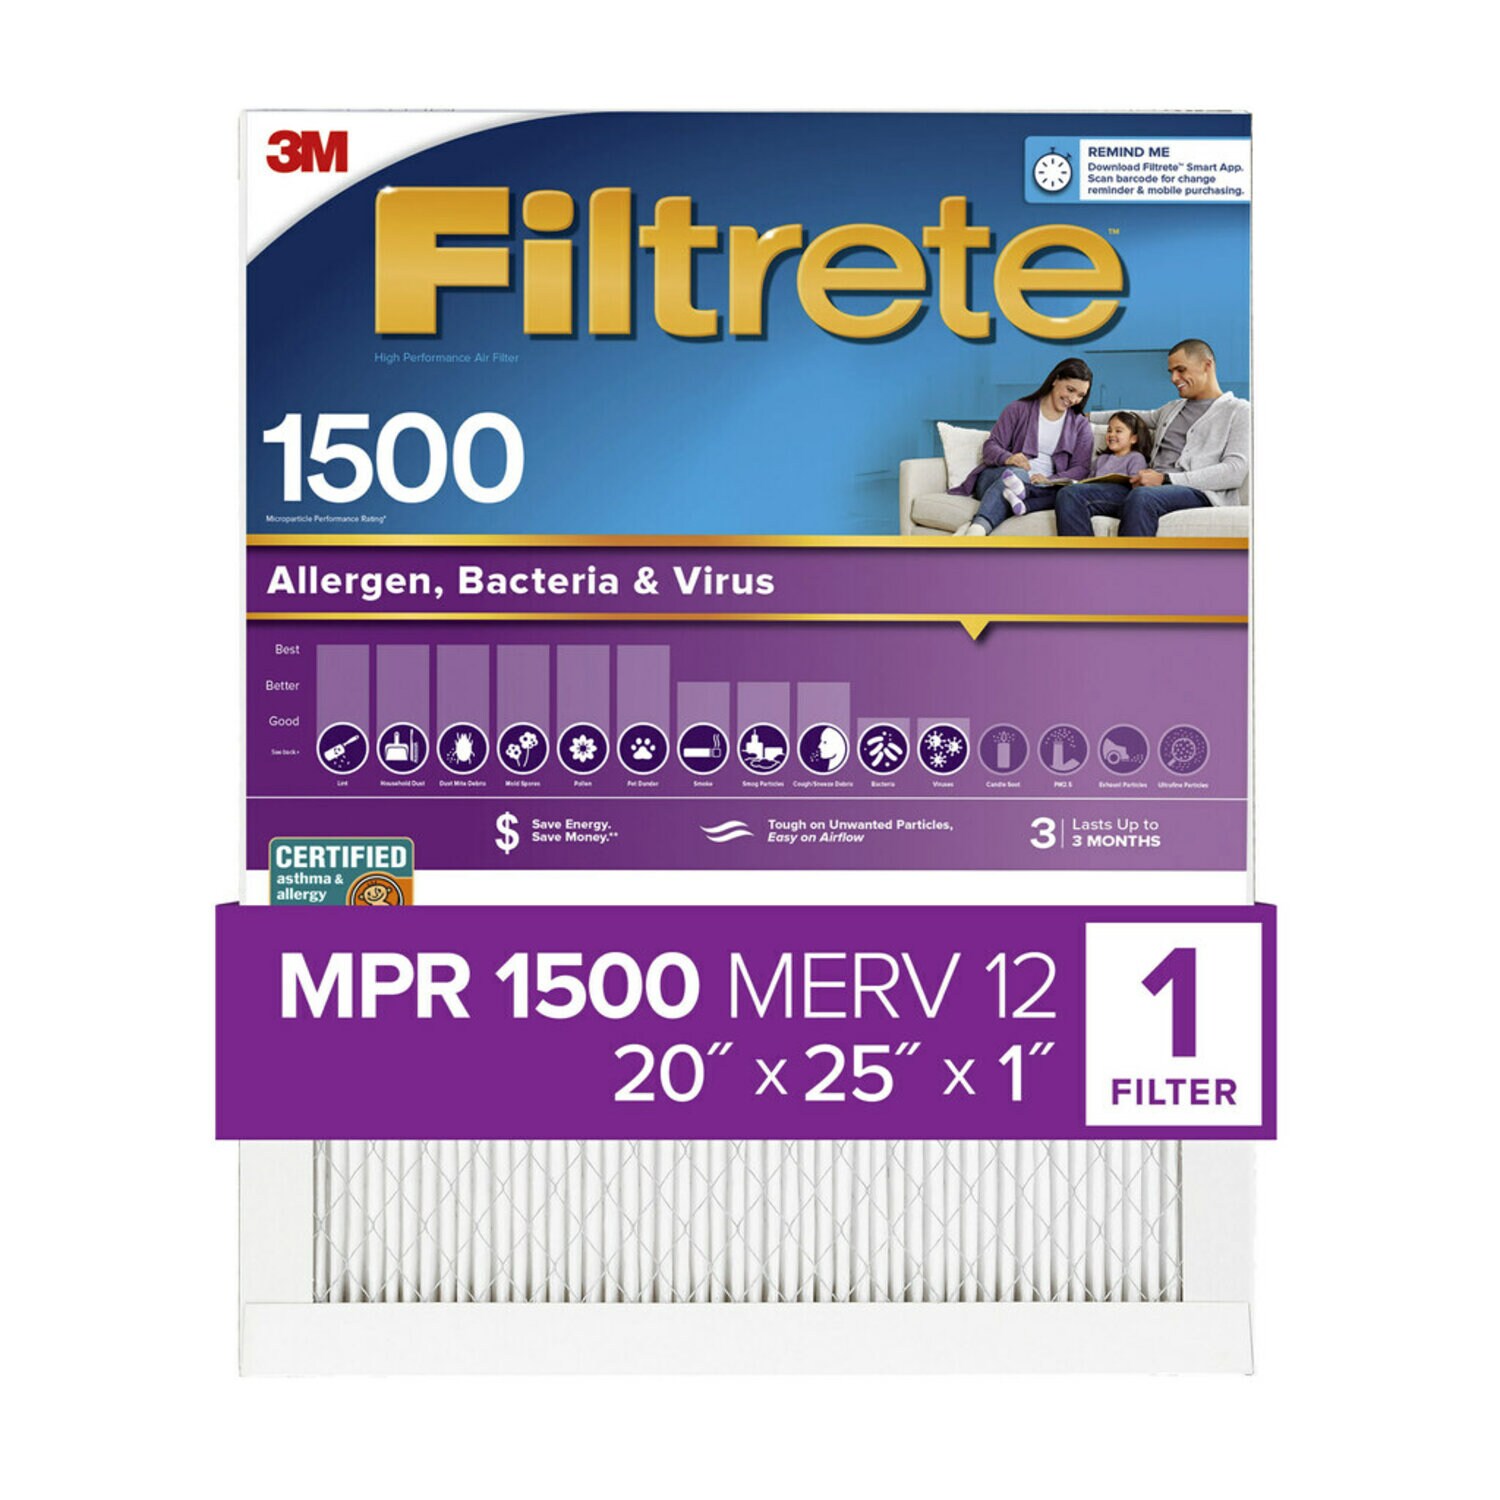 7100203129 - Filtrete Allergen, Bacteria & Virus Air Filter, 1500 MPR, 2003-4-HR, 20
in x 25 in x 1 in (50,8 cm x 63,5 cm x 2,5 cm)